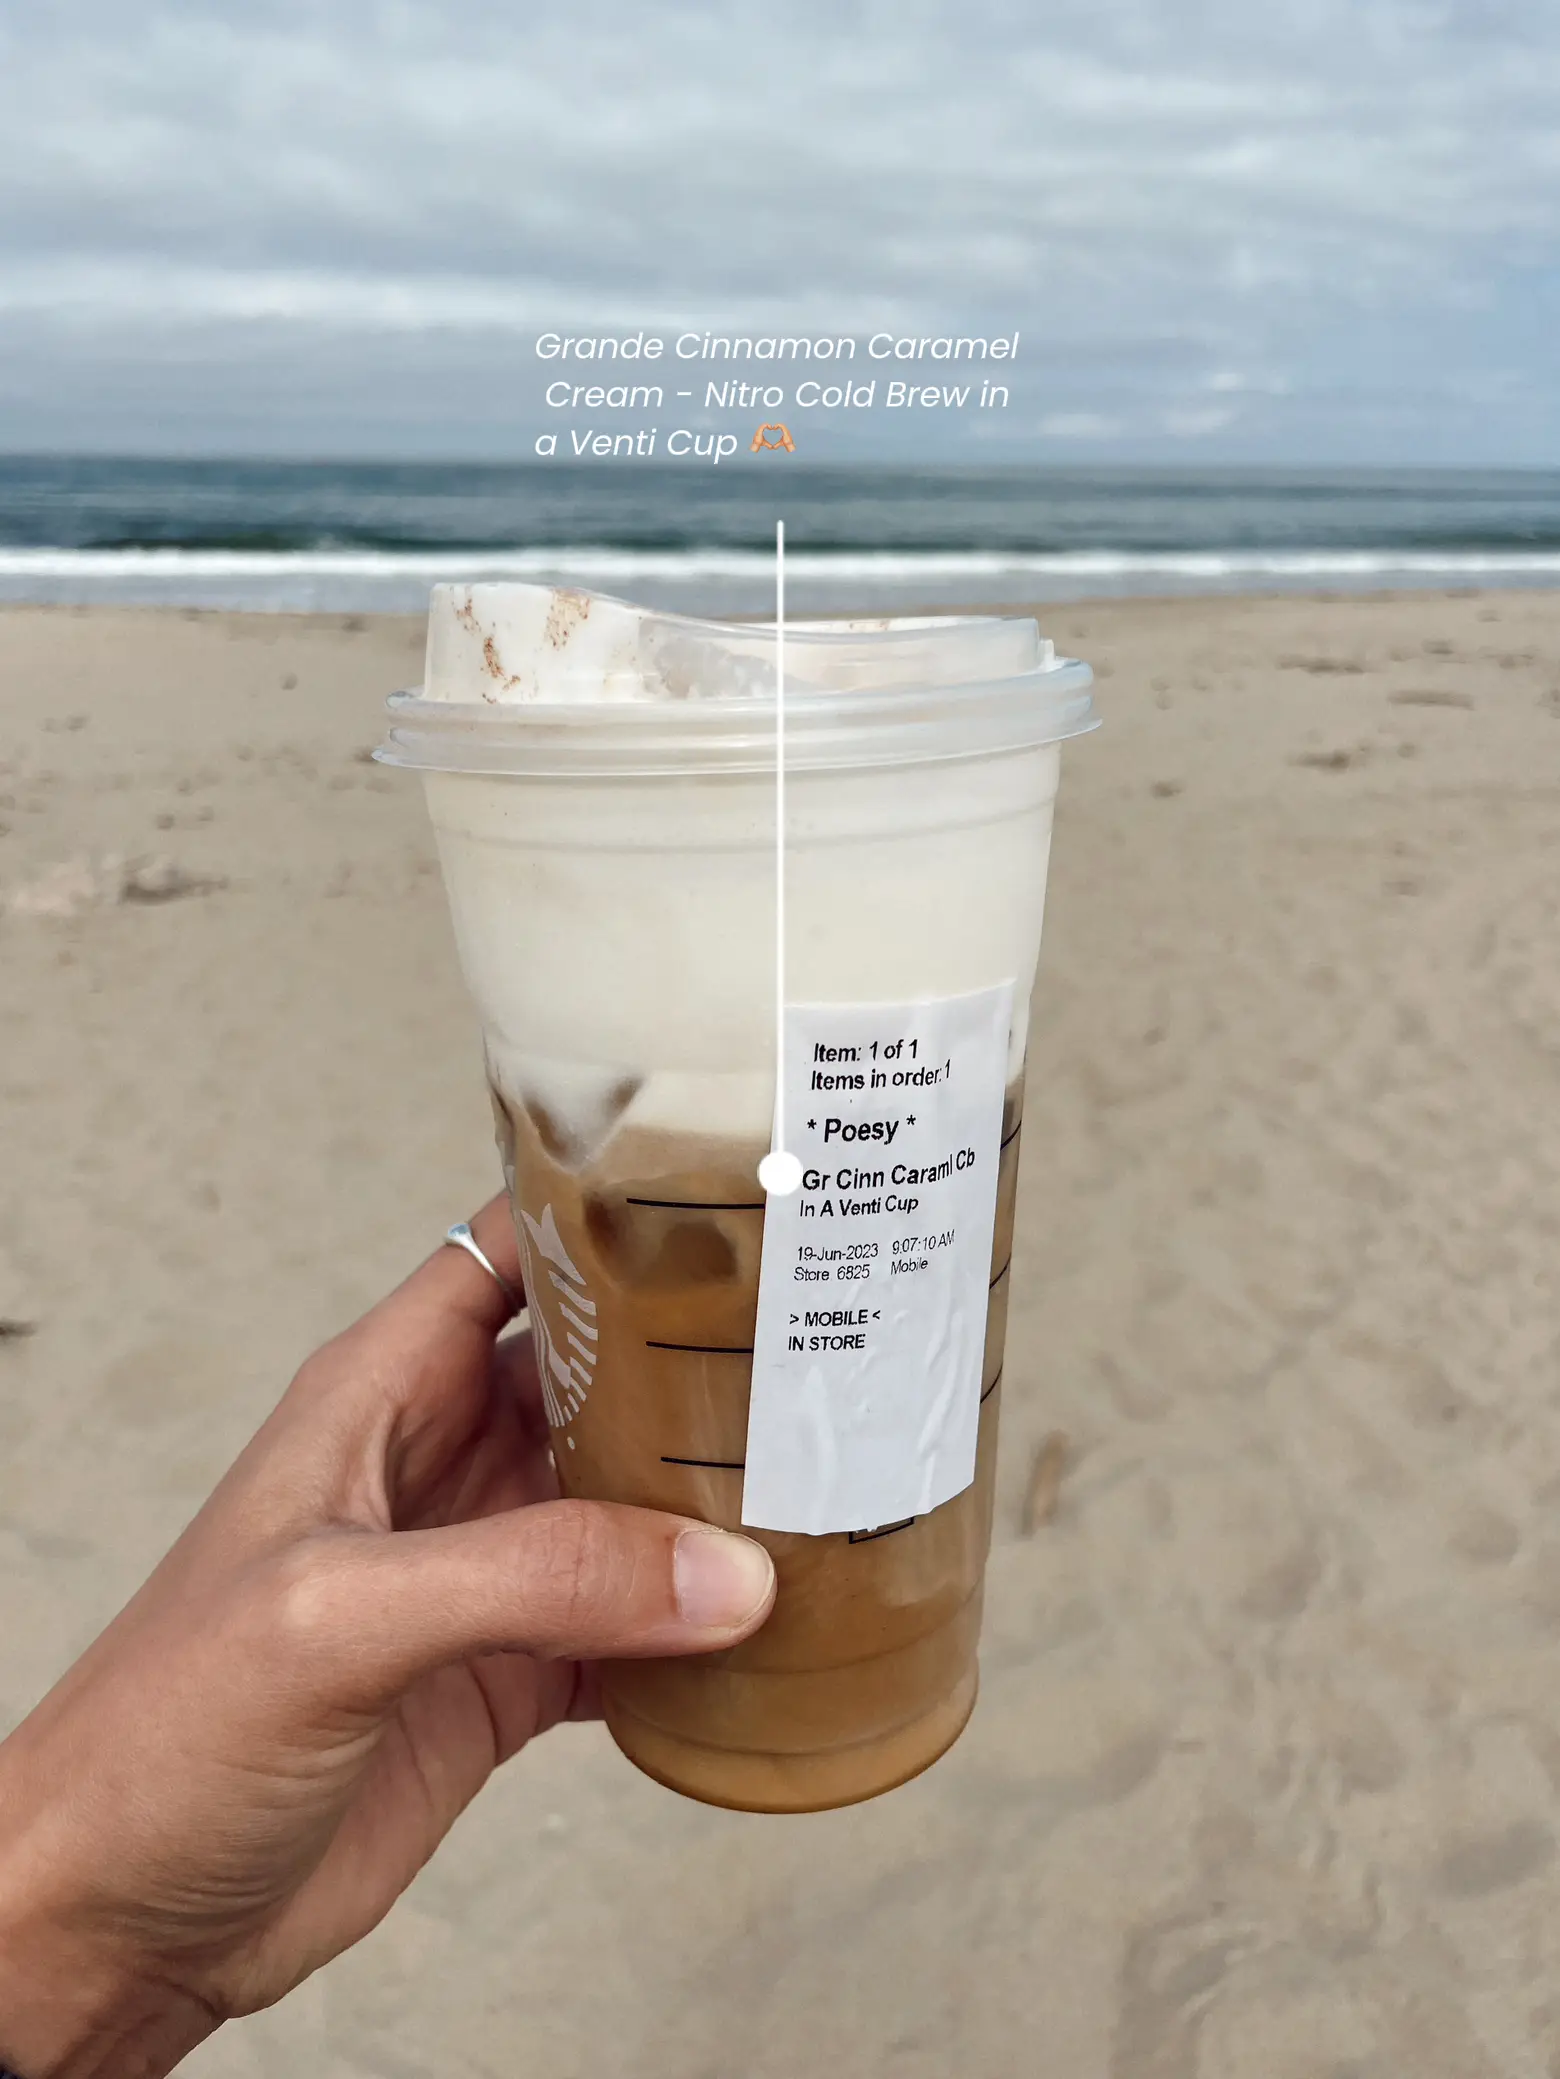 Starbucks Copycat Cinnamon Caramel Cream Nitro Cold Brew